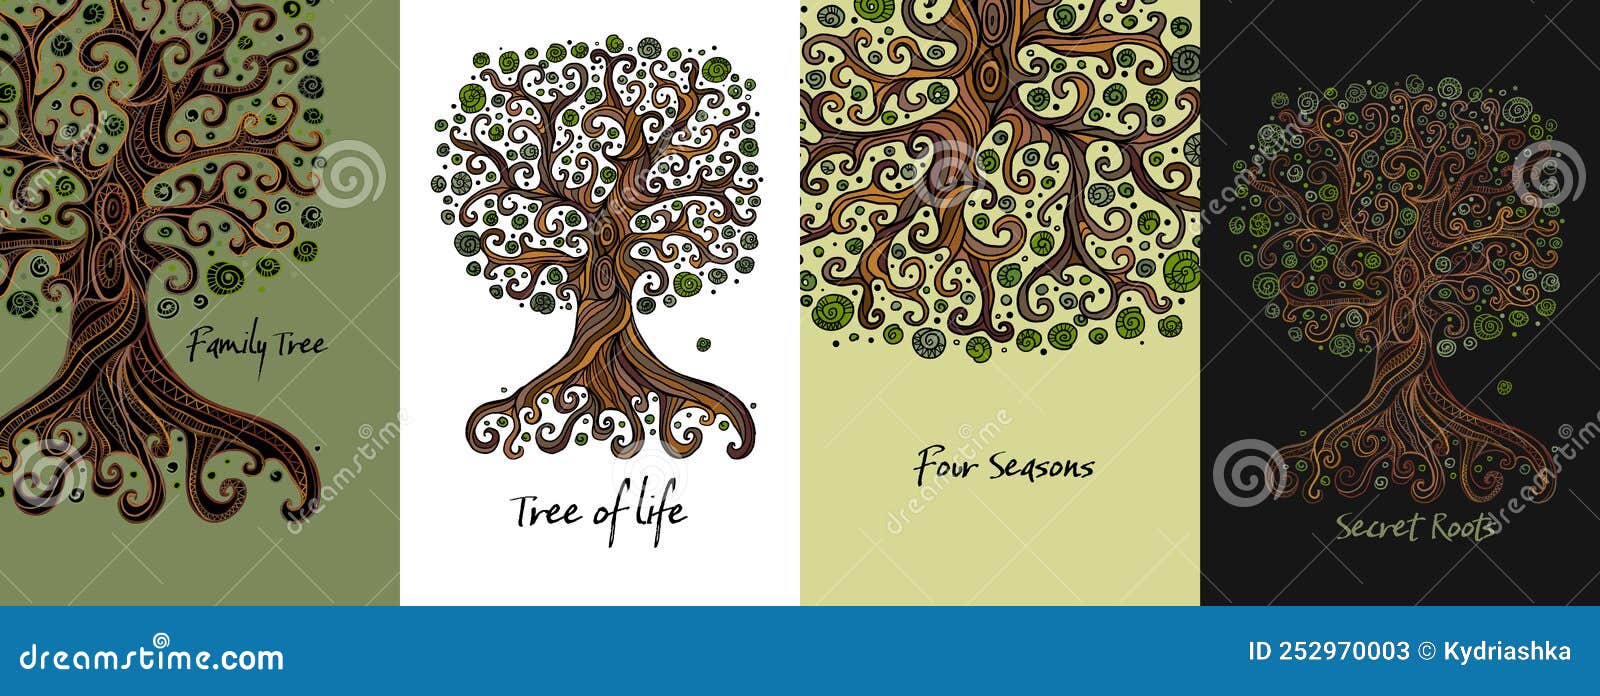 Celtic Tree of Life Banner